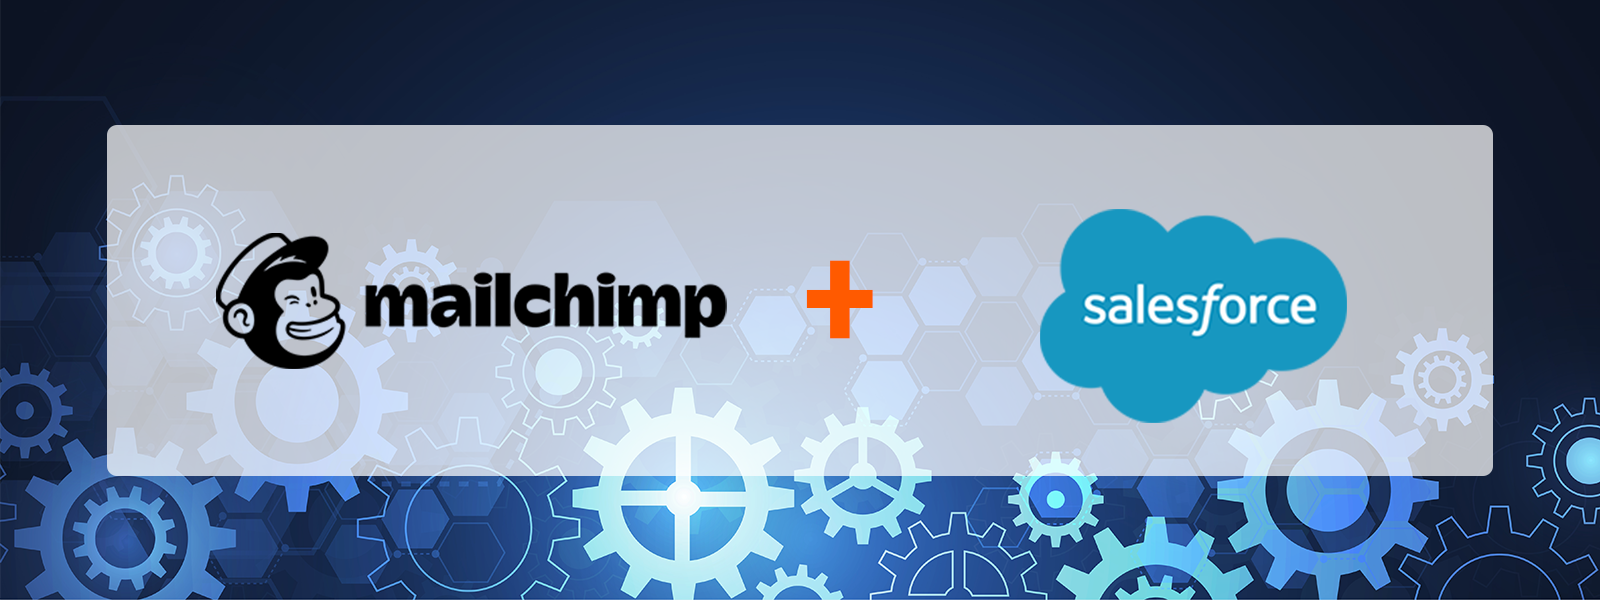 Mailchimp to Salesforce: Capturing Hard Bounce Metrics through Integration